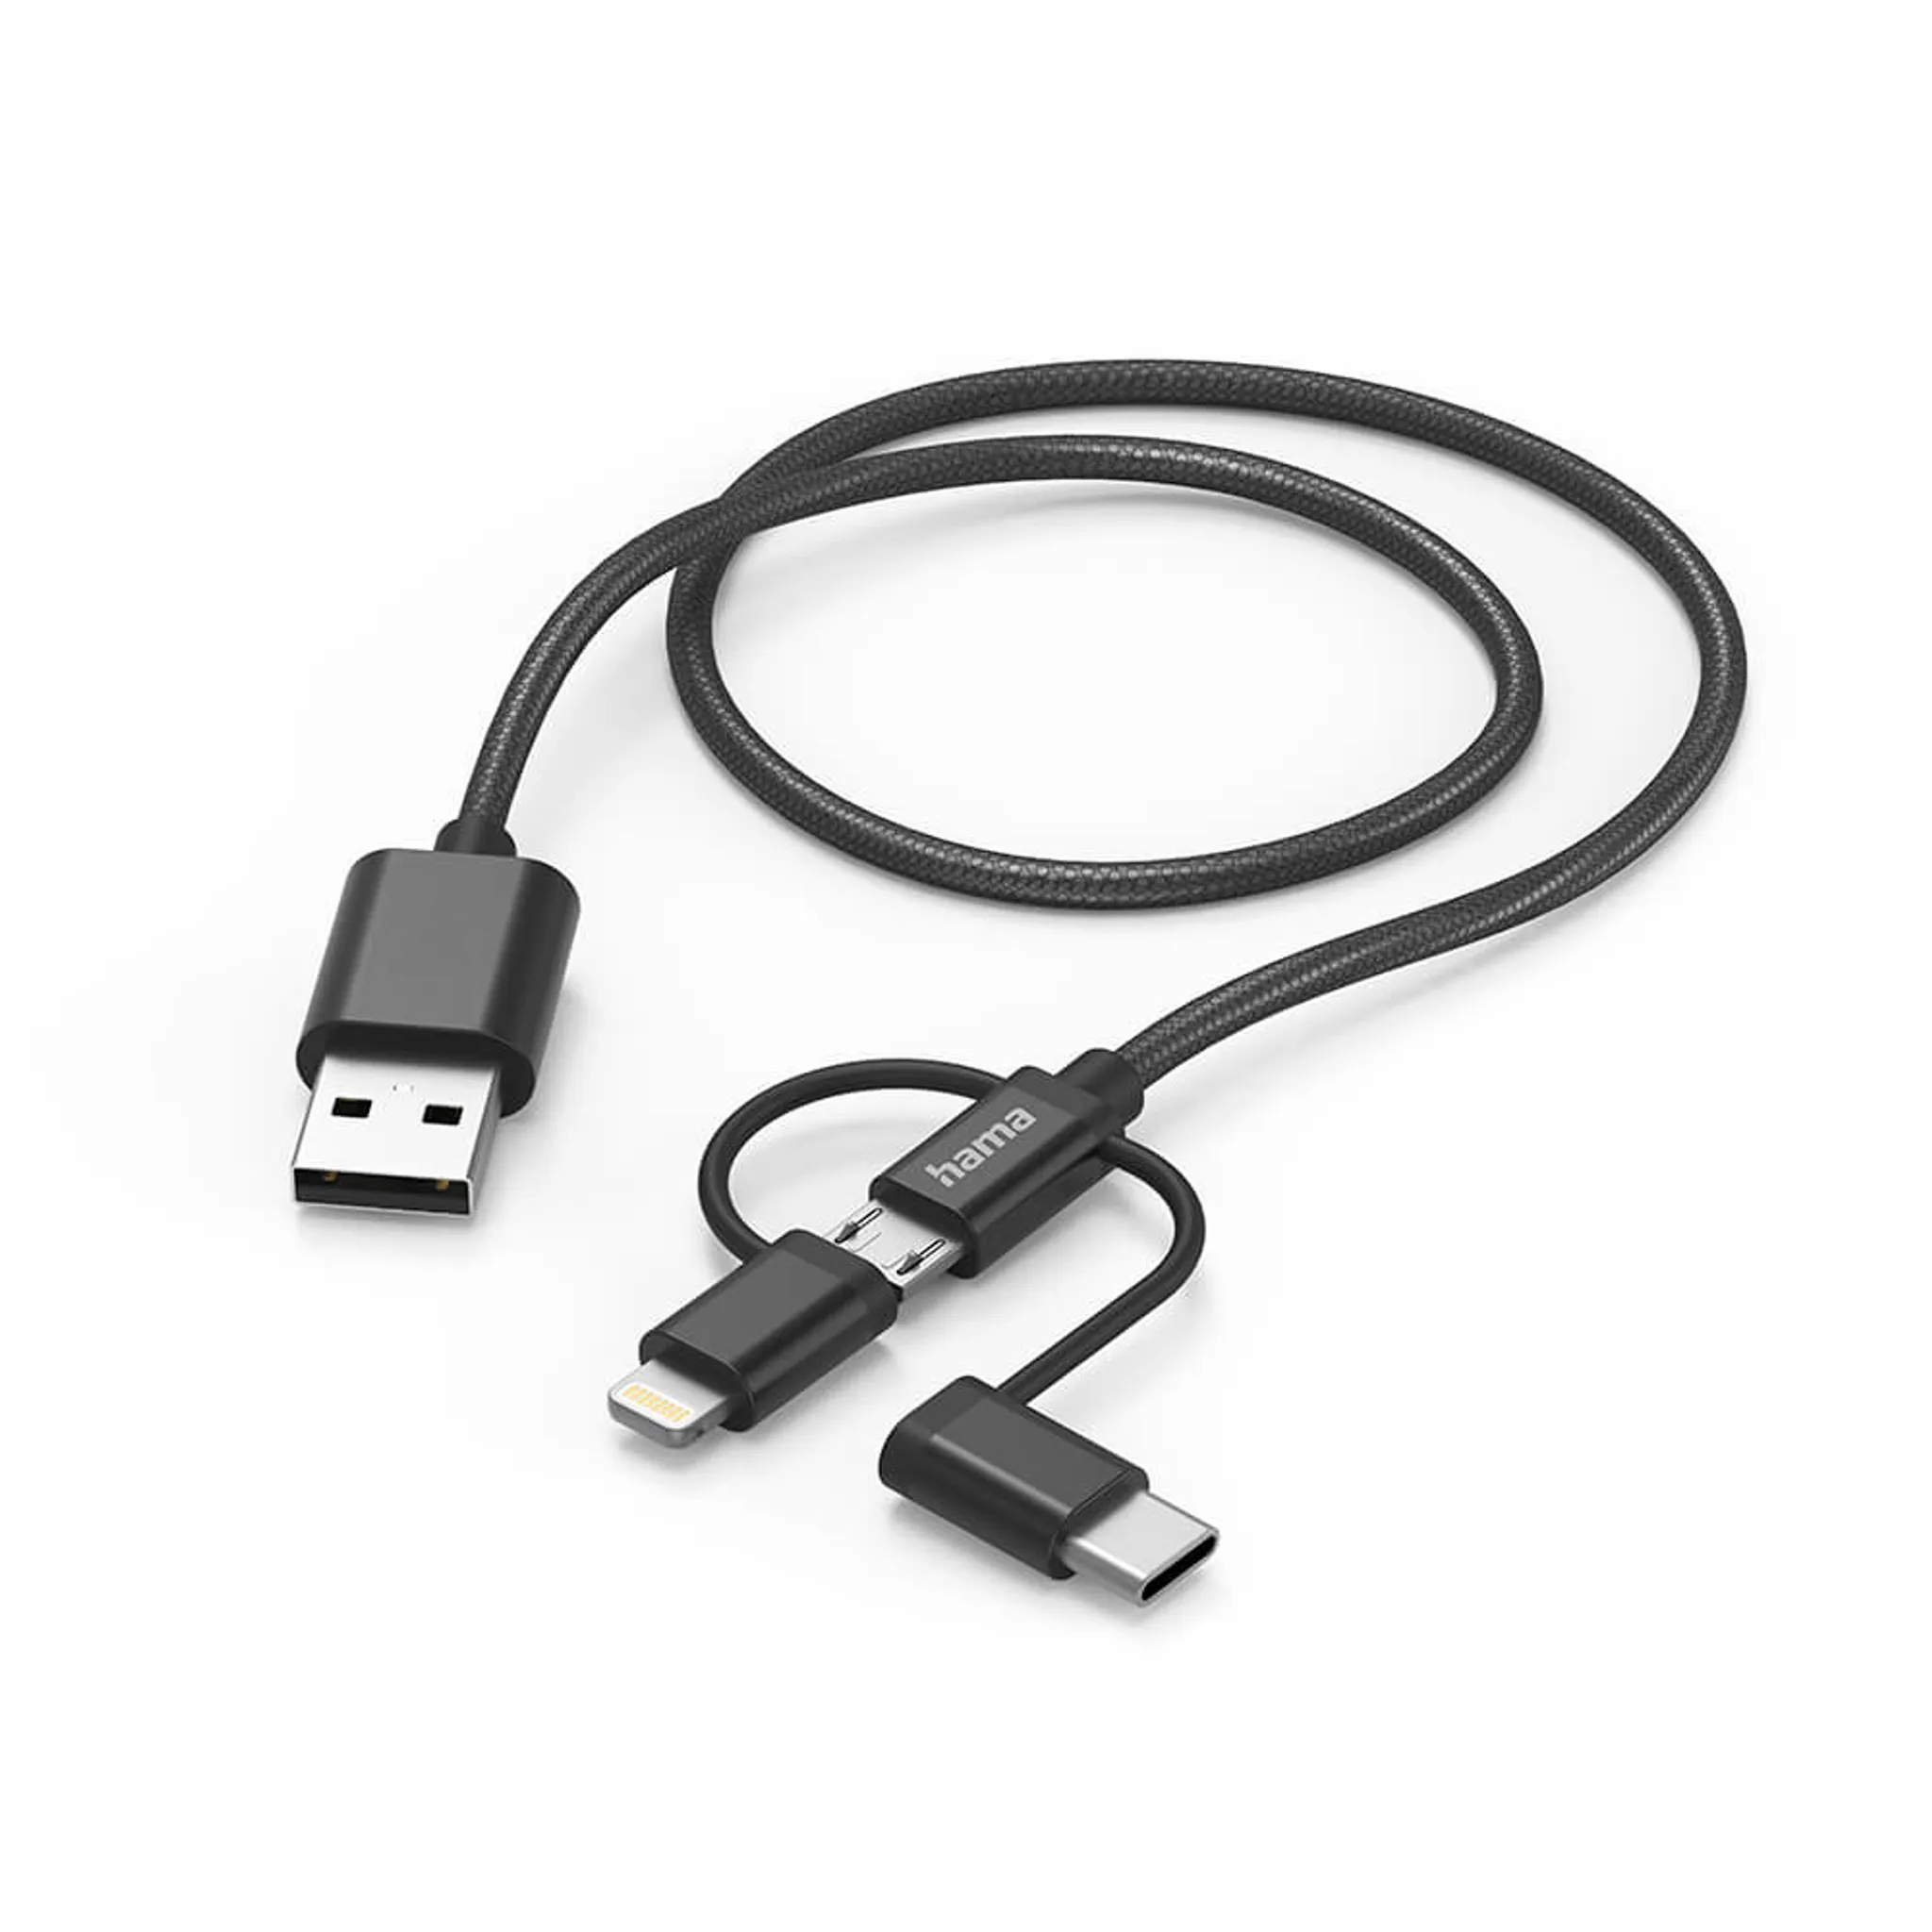 2m Micro USB Kabel TURBO Ladekabel Auto Datenkabel Handy Samsung